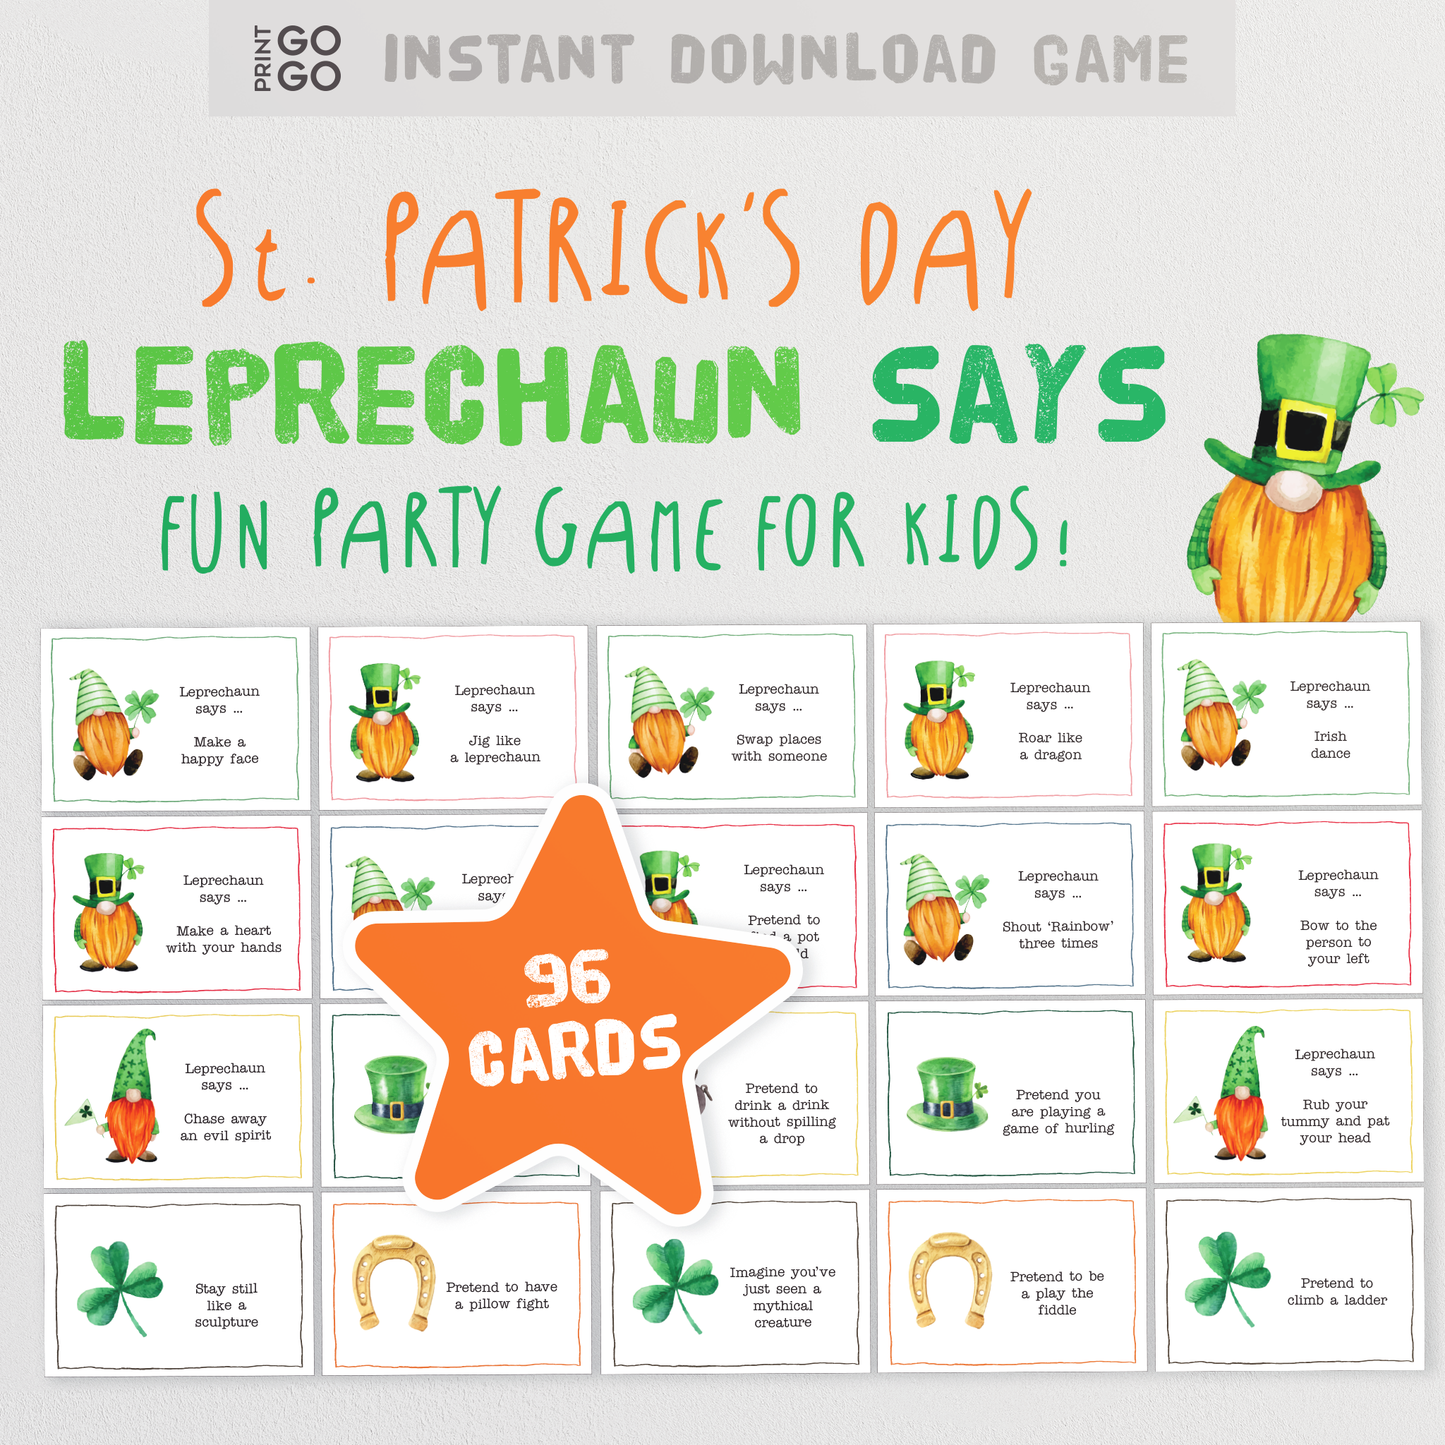 Leprechaun Says - The Fun St. Patricks Day Party Game for Kids!